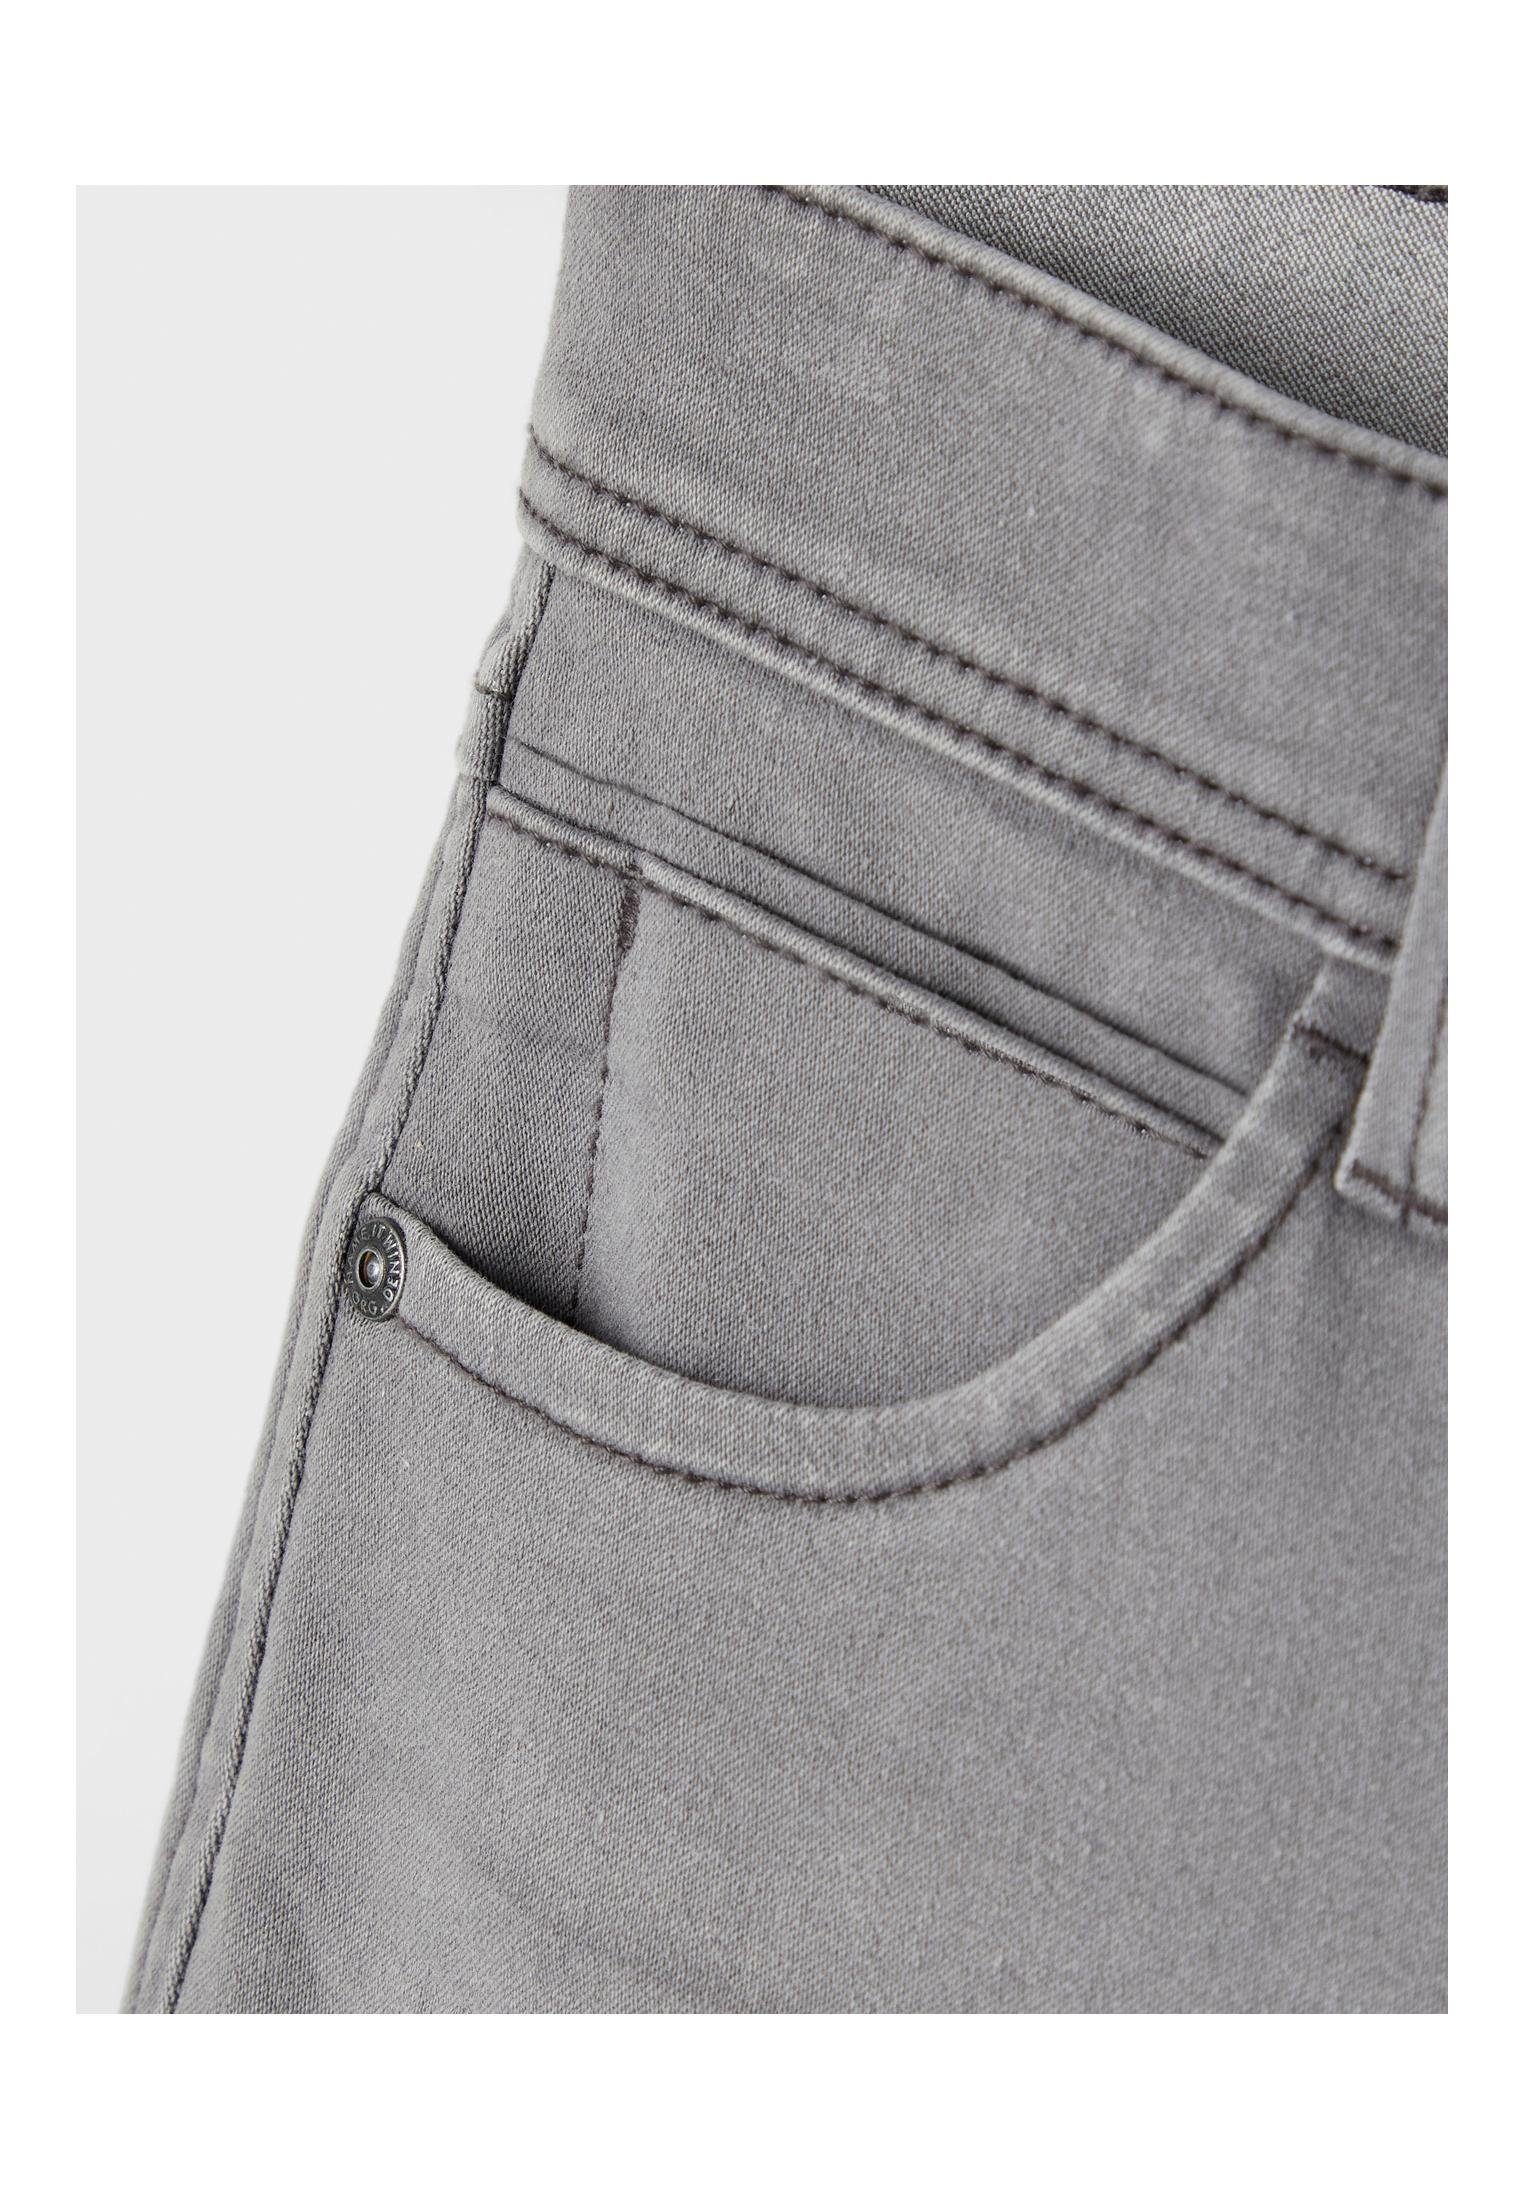 XSLIM Skinny-fit-Jeans NKMSILAS It grey medium Name JEANS 2002-TX denim